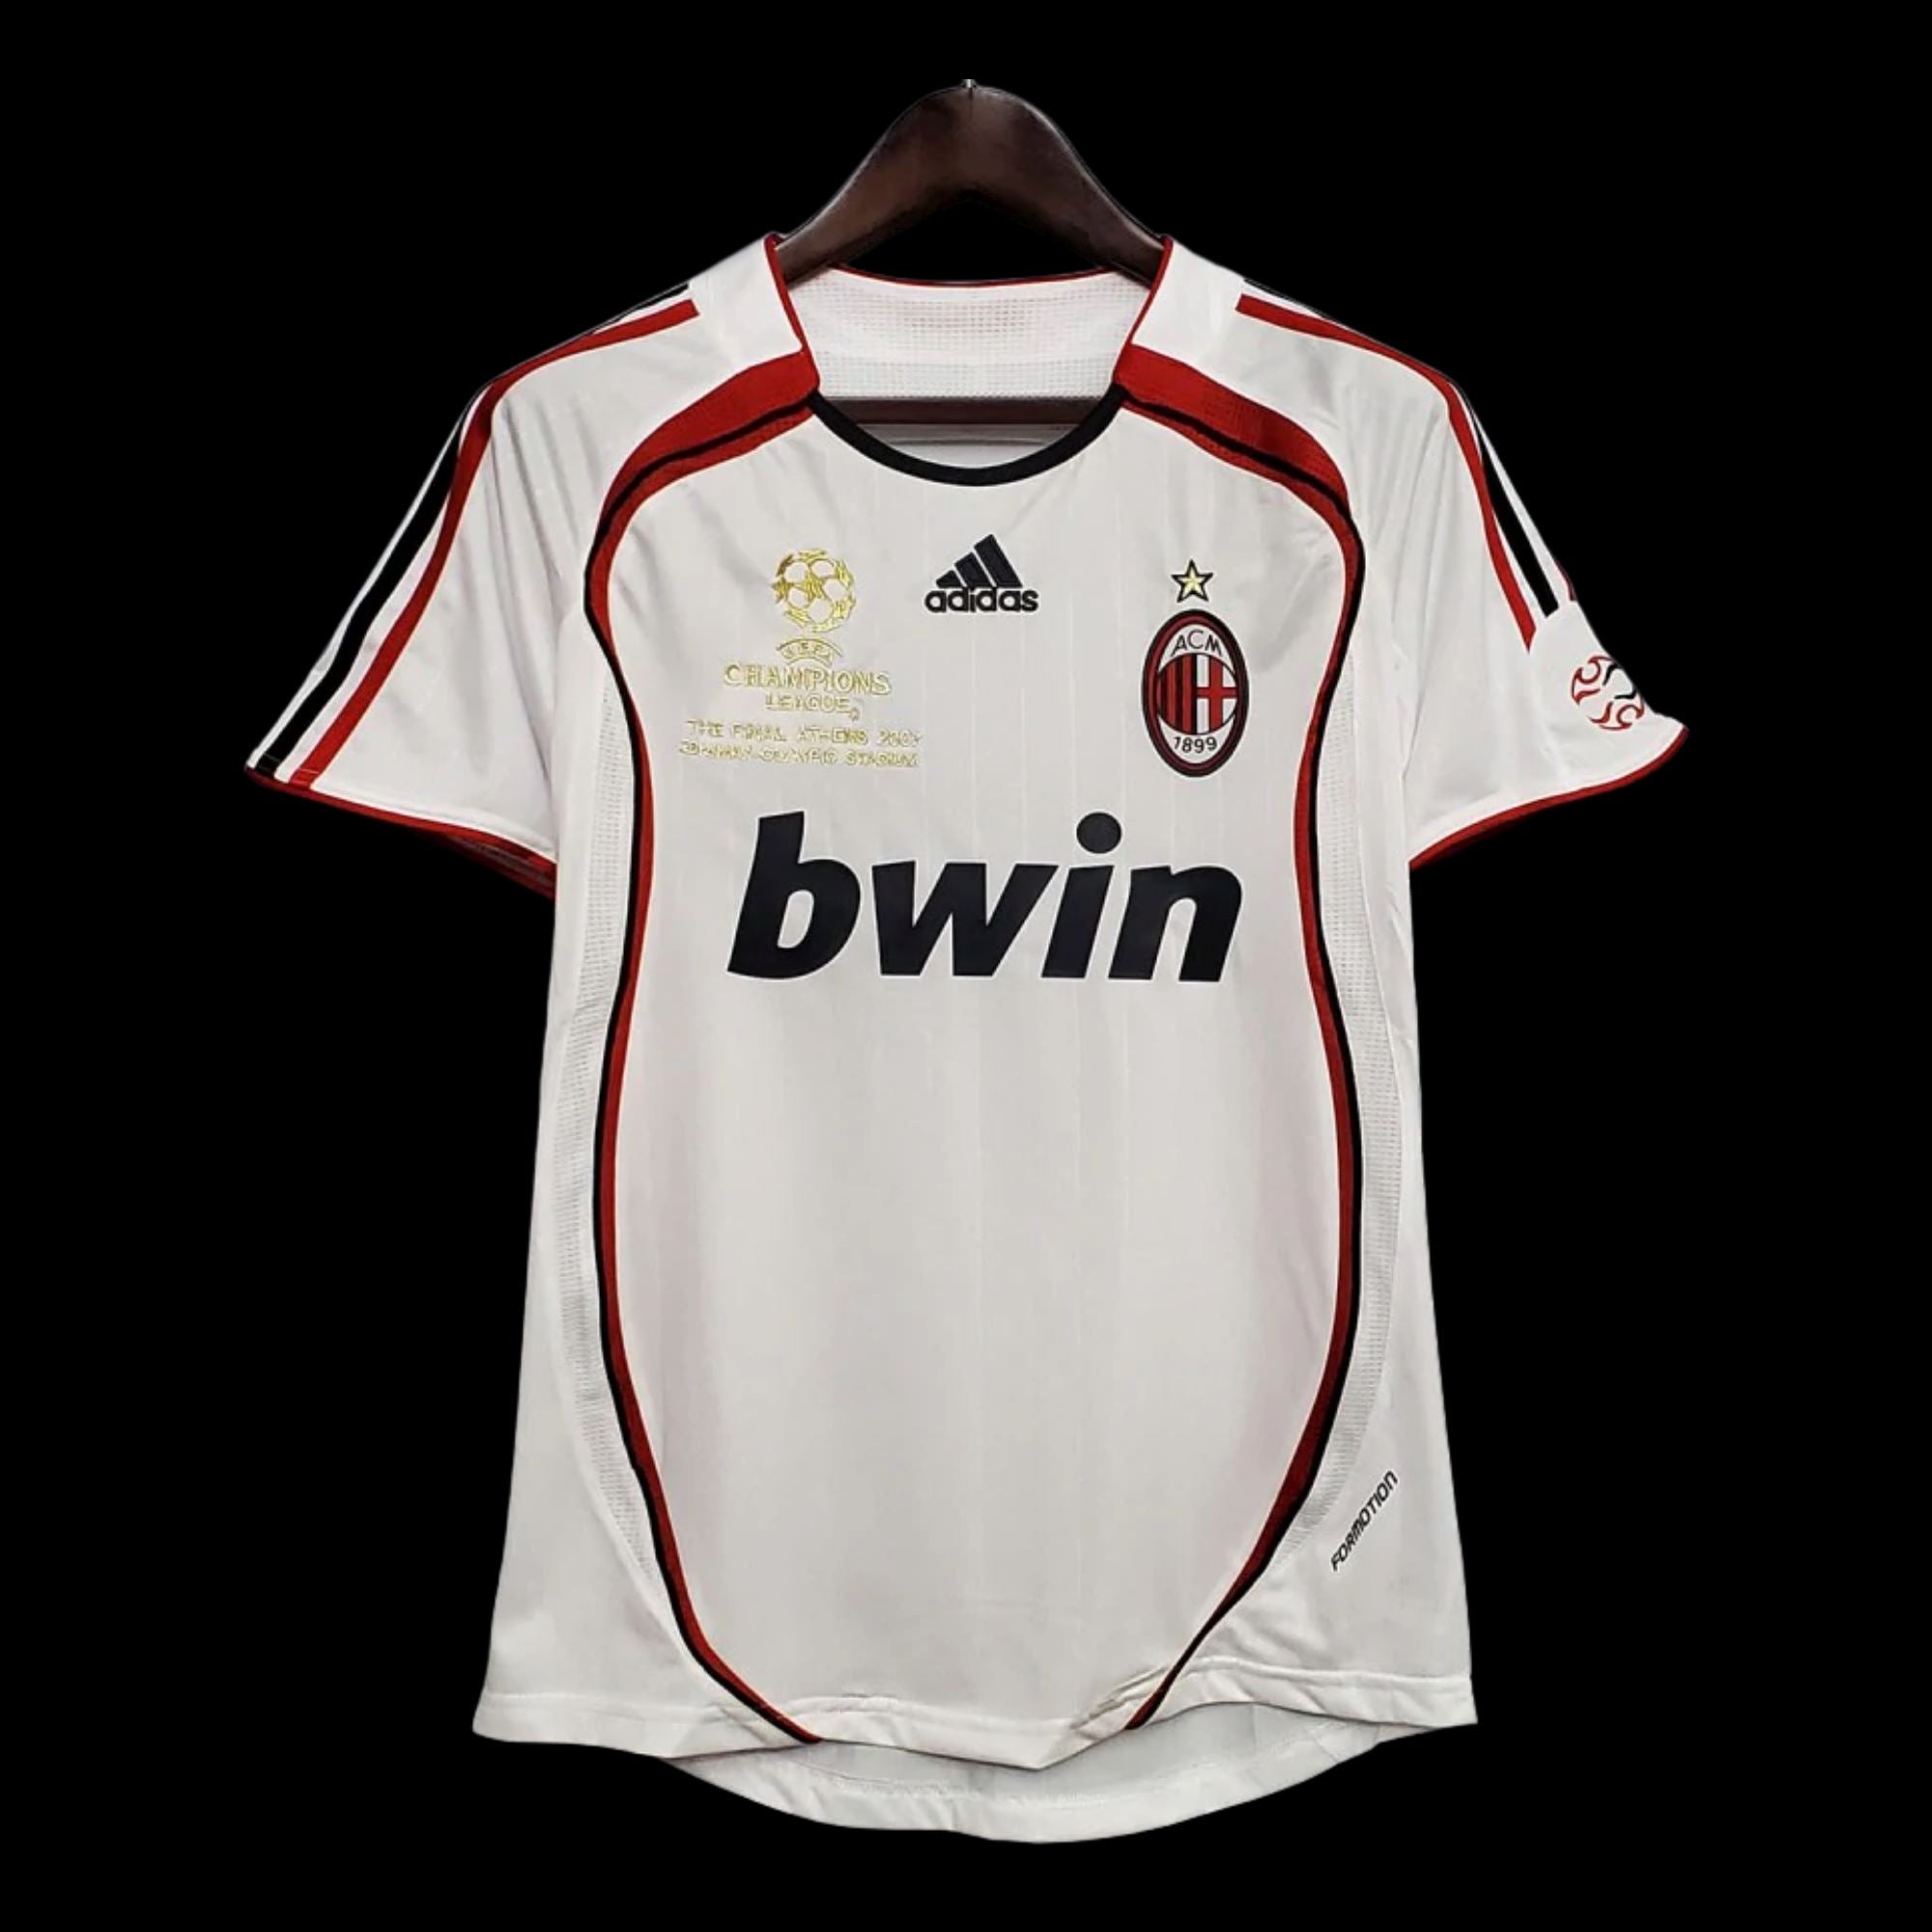 2006-07 AC Milan Athens Long Sleeve Champions League final jersey